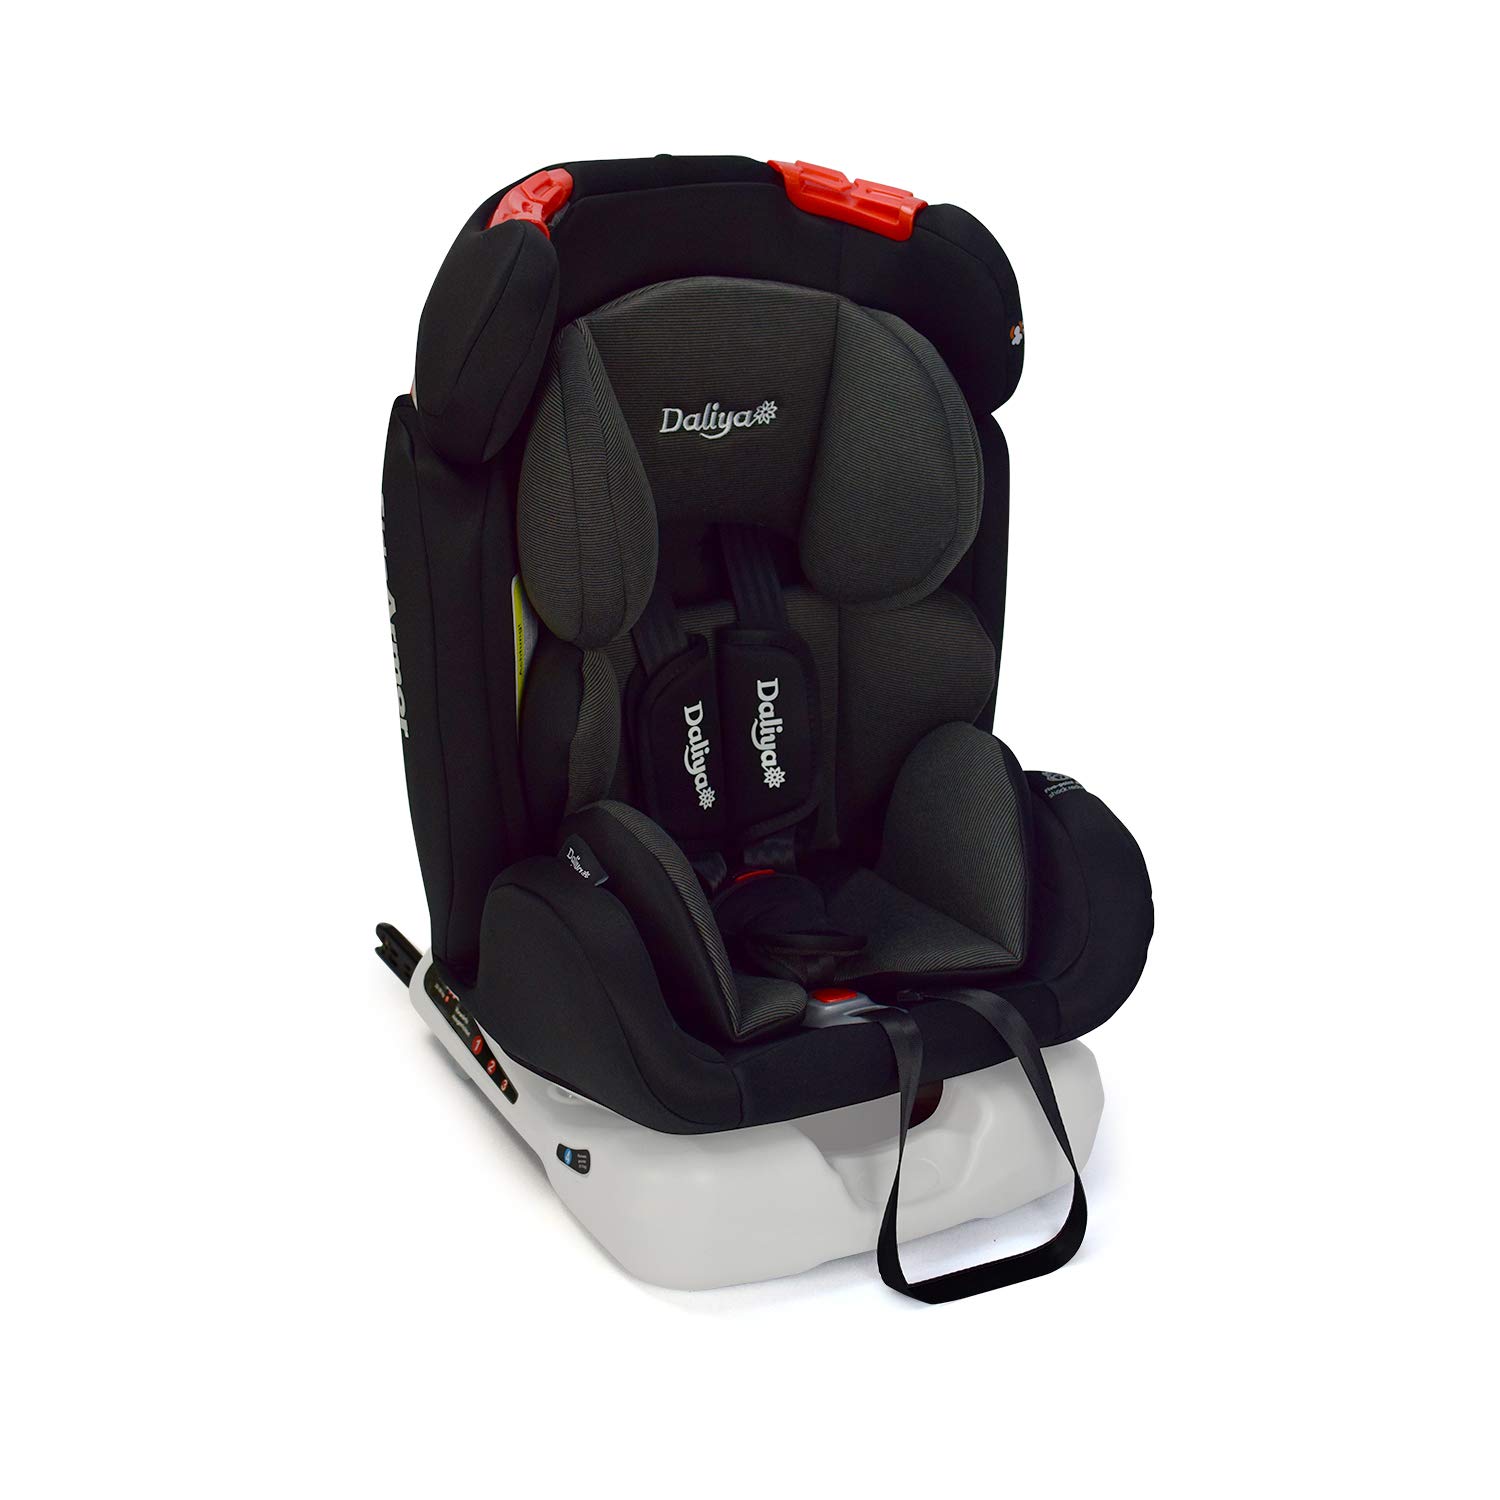 Daliya® Sitorino Child Seat 0-36 kg with Isofix & Top Tether I Car Seat Group 0+1+2+3 I 5-Point Seat Belt I Black